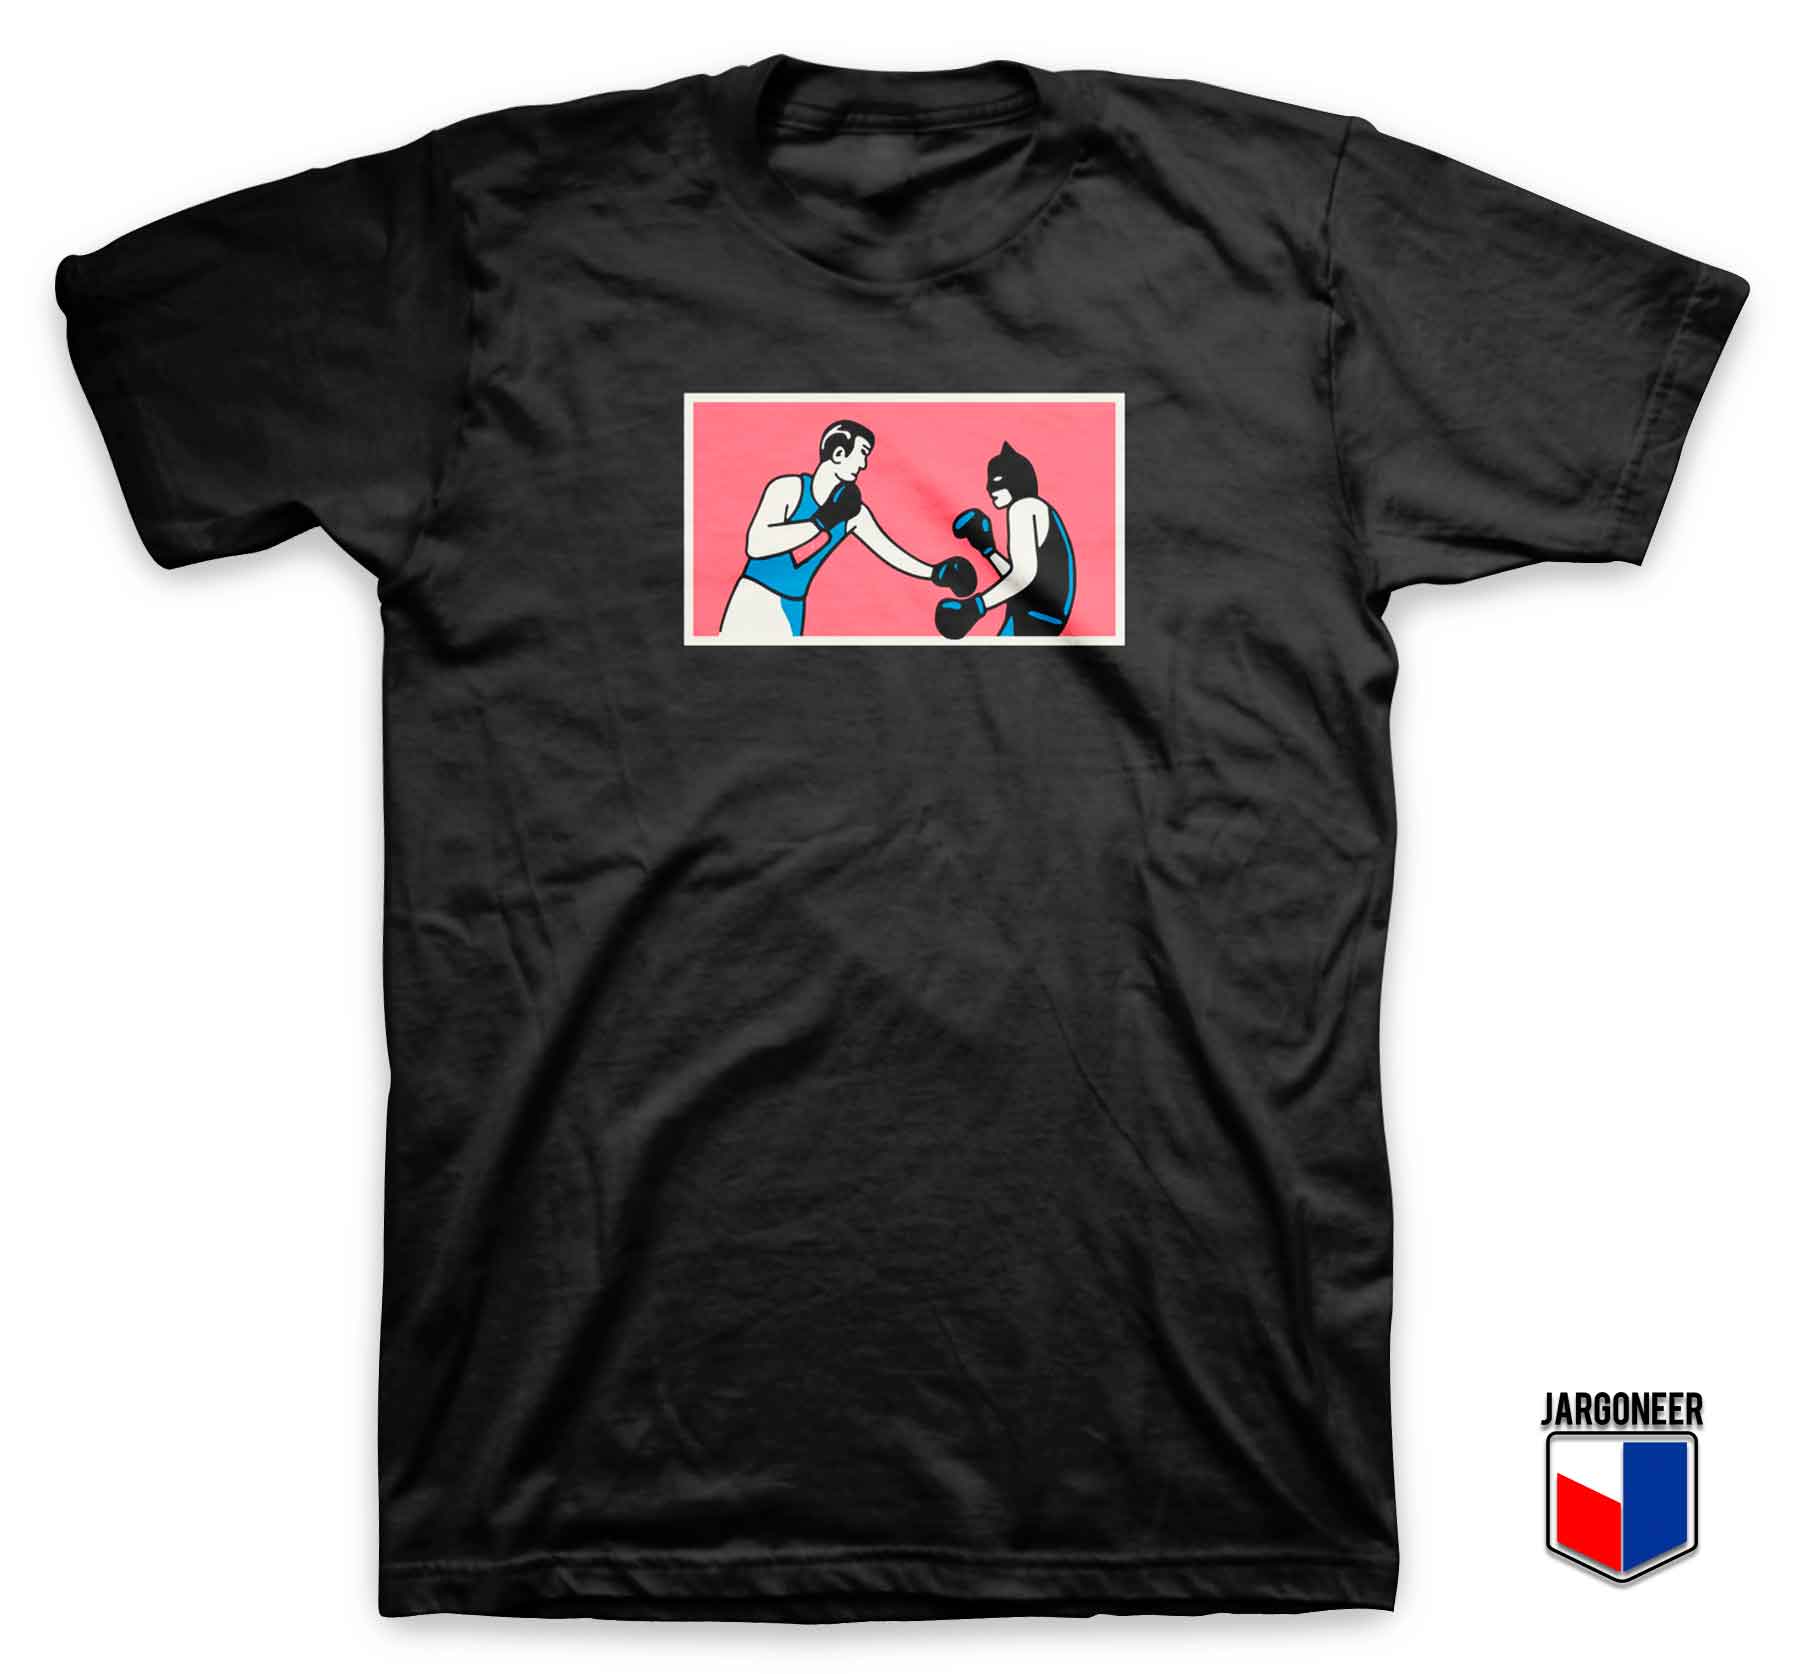 Superman Vs Batman Boxing - Shop Unique Graphic Cool Shirt Designs